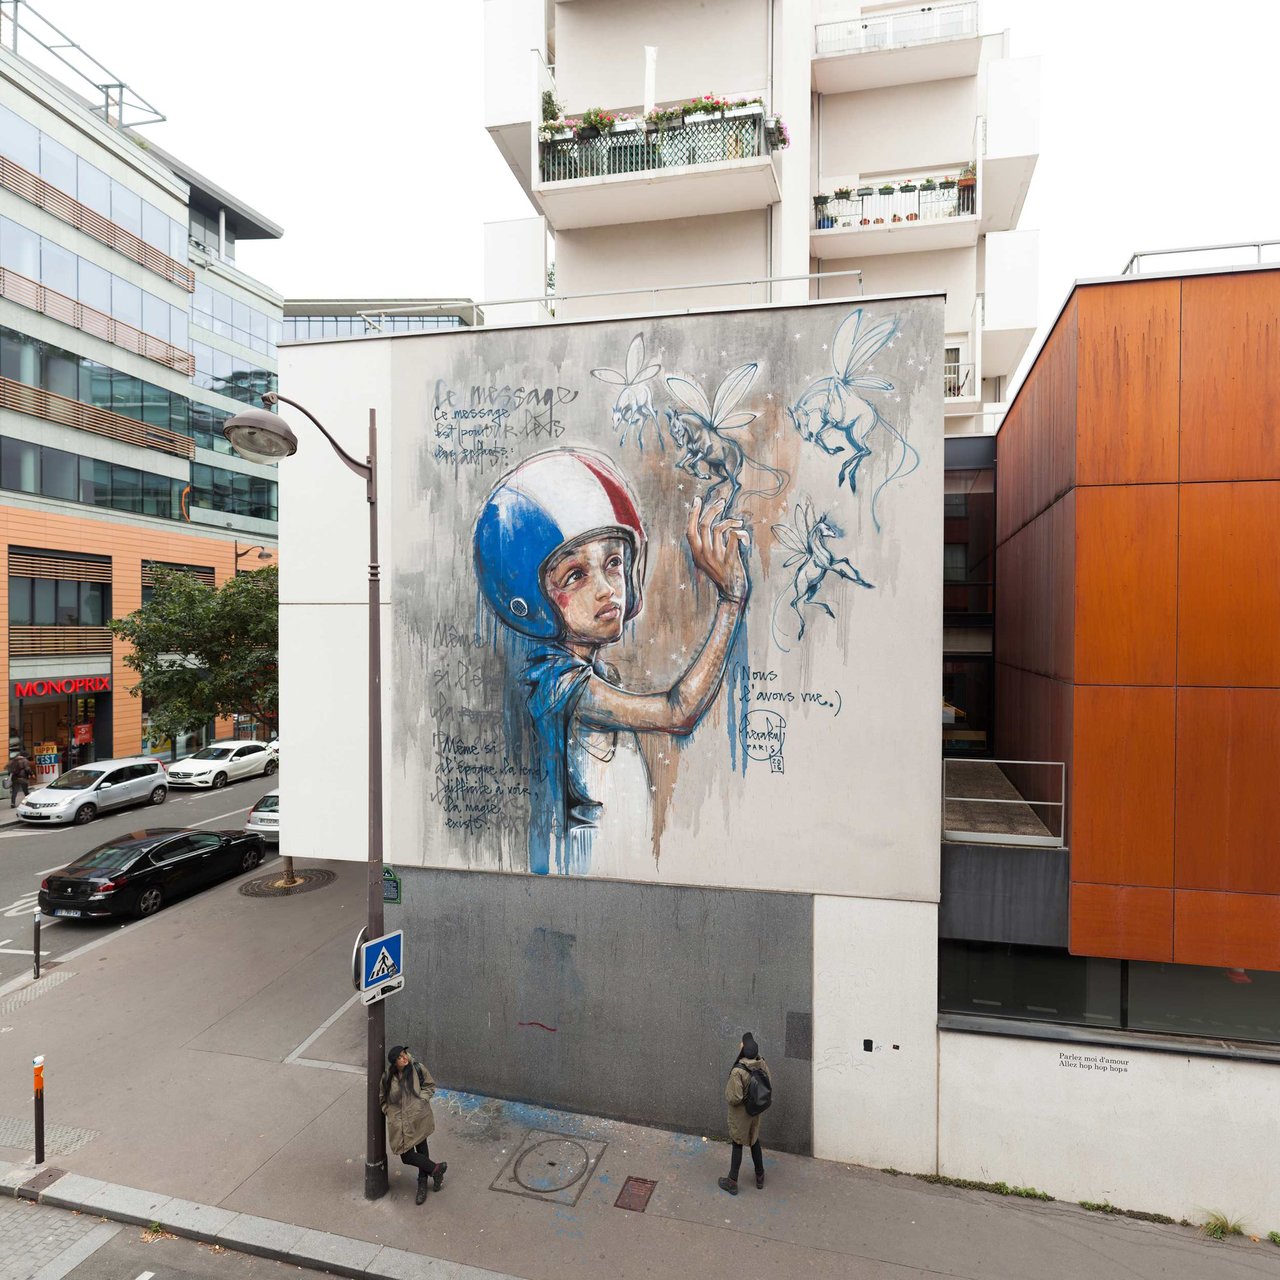 “Message For The Children” by Herakut in Paris, France #streetart https://streetartnews.net/2016/10/message-for-the-children-by-herakut-in-paris-france.html https://t.co/OoTXJ9v3IX